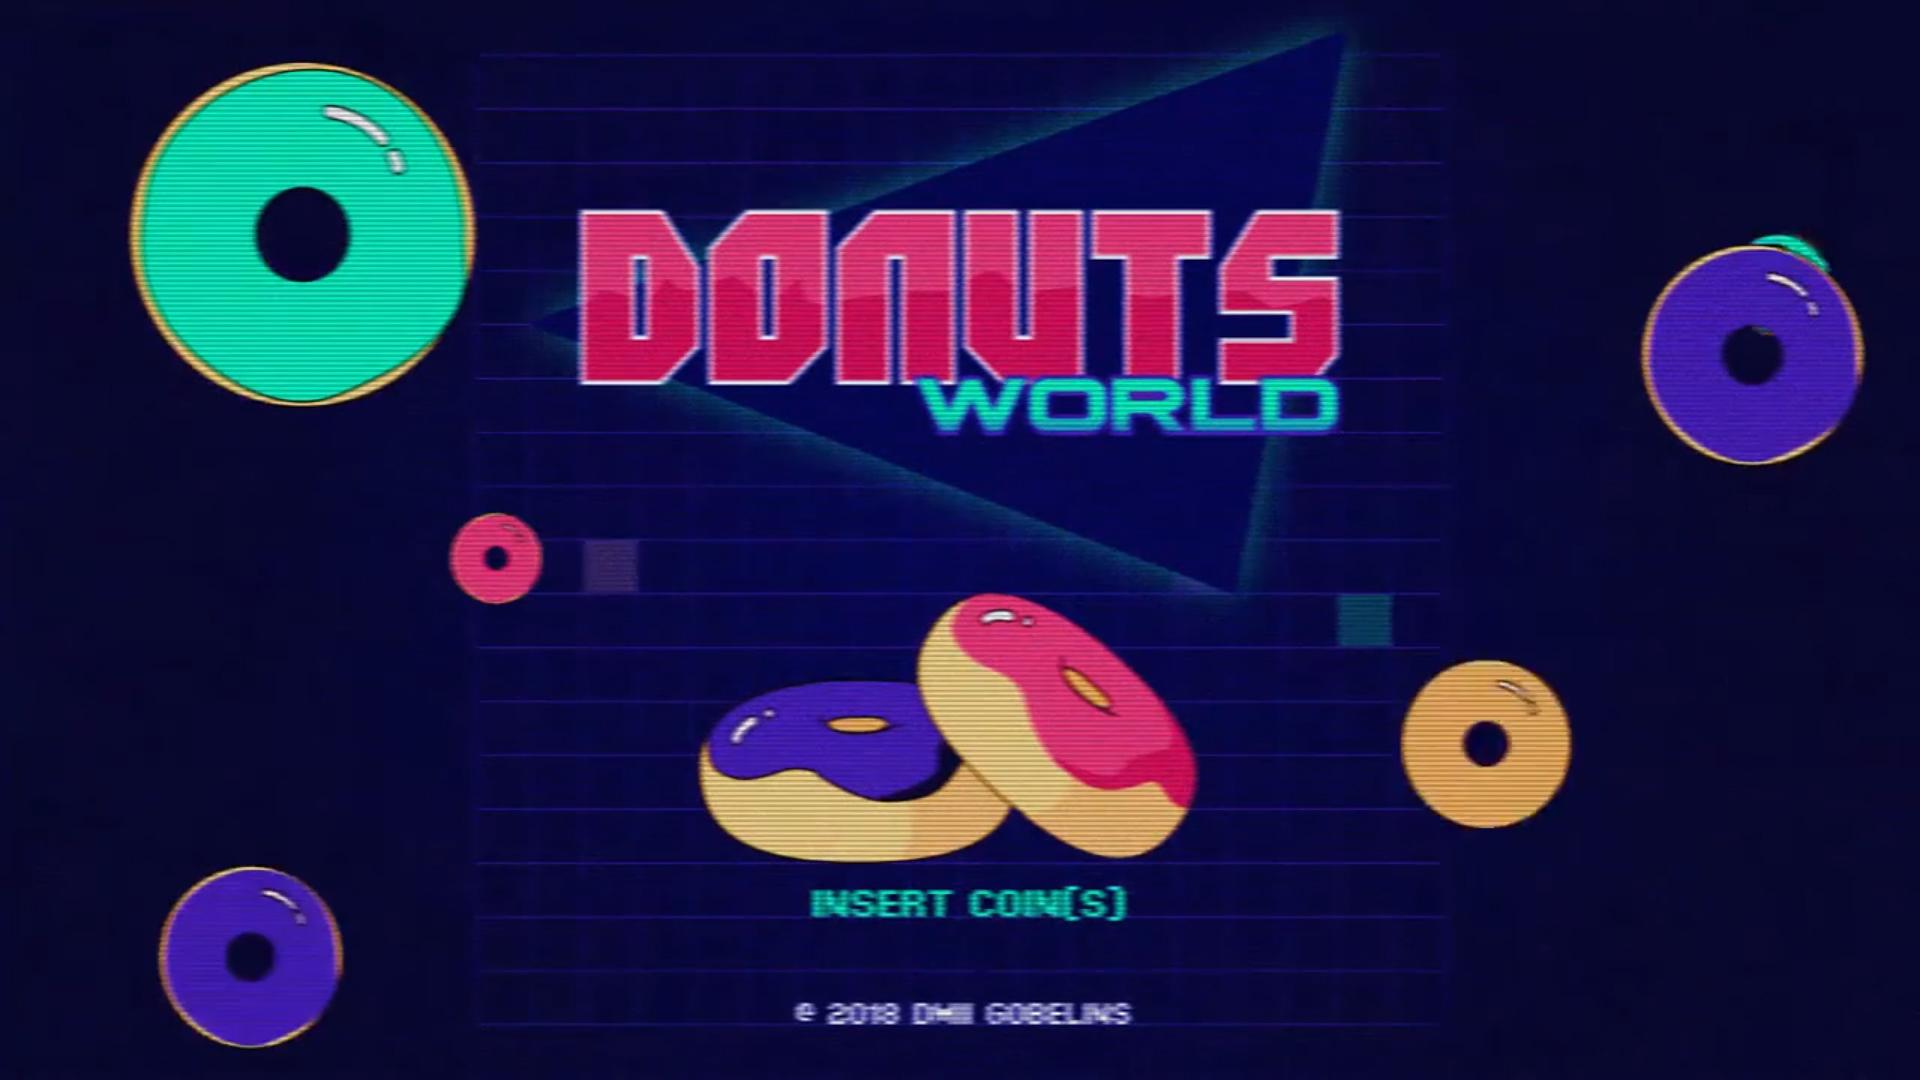 Donuts World